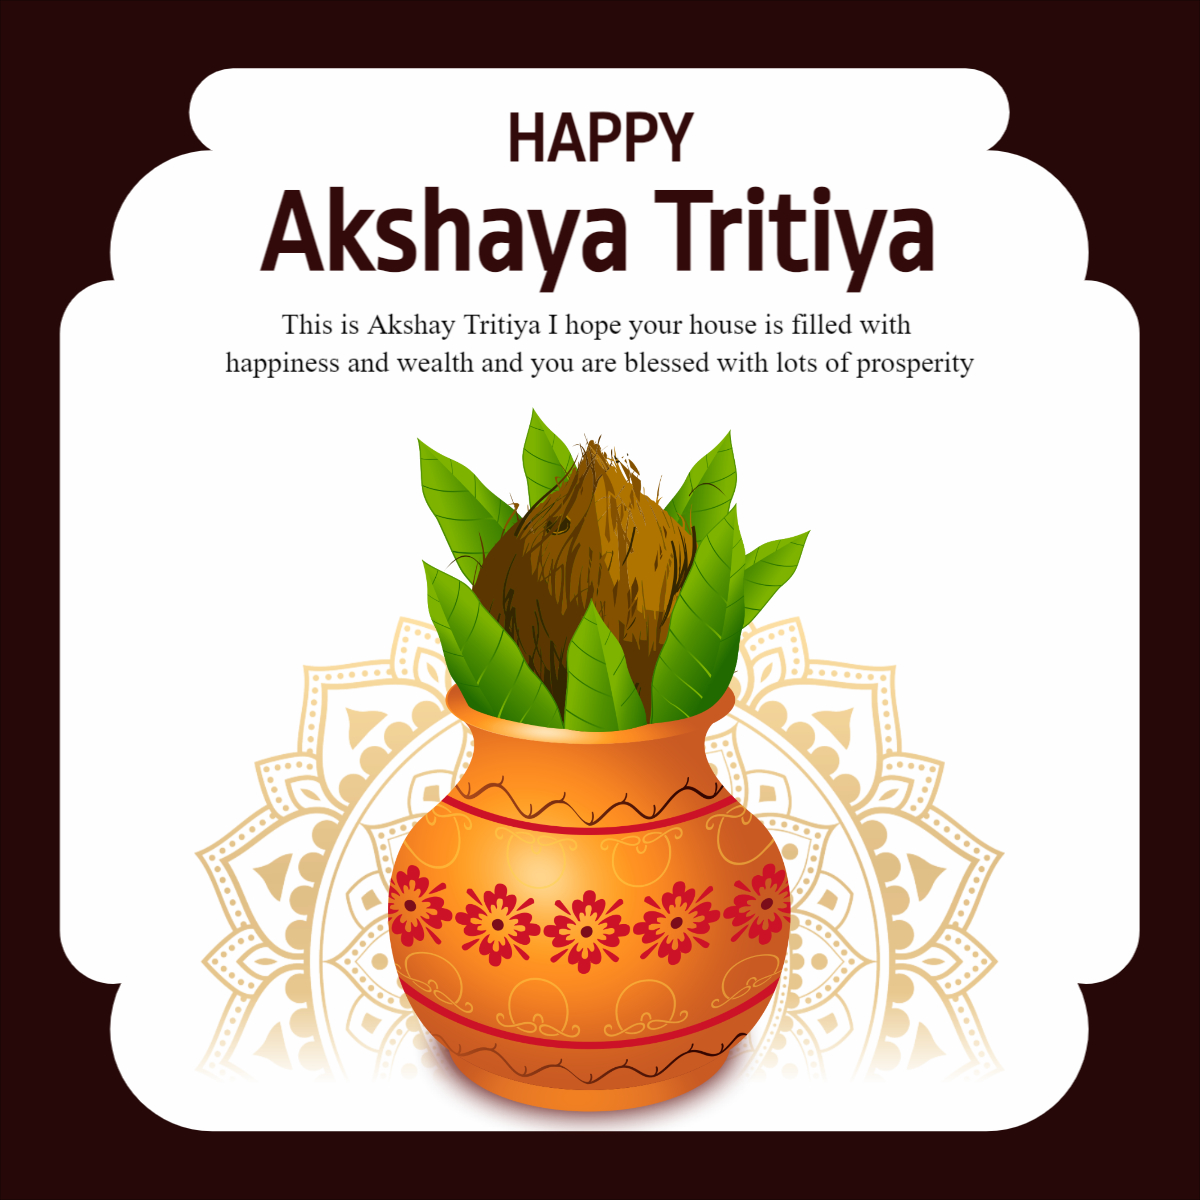 Happy Akshaya Tritiya Hindu Festival Festive Banner Wishes Greeting Design Template For Free